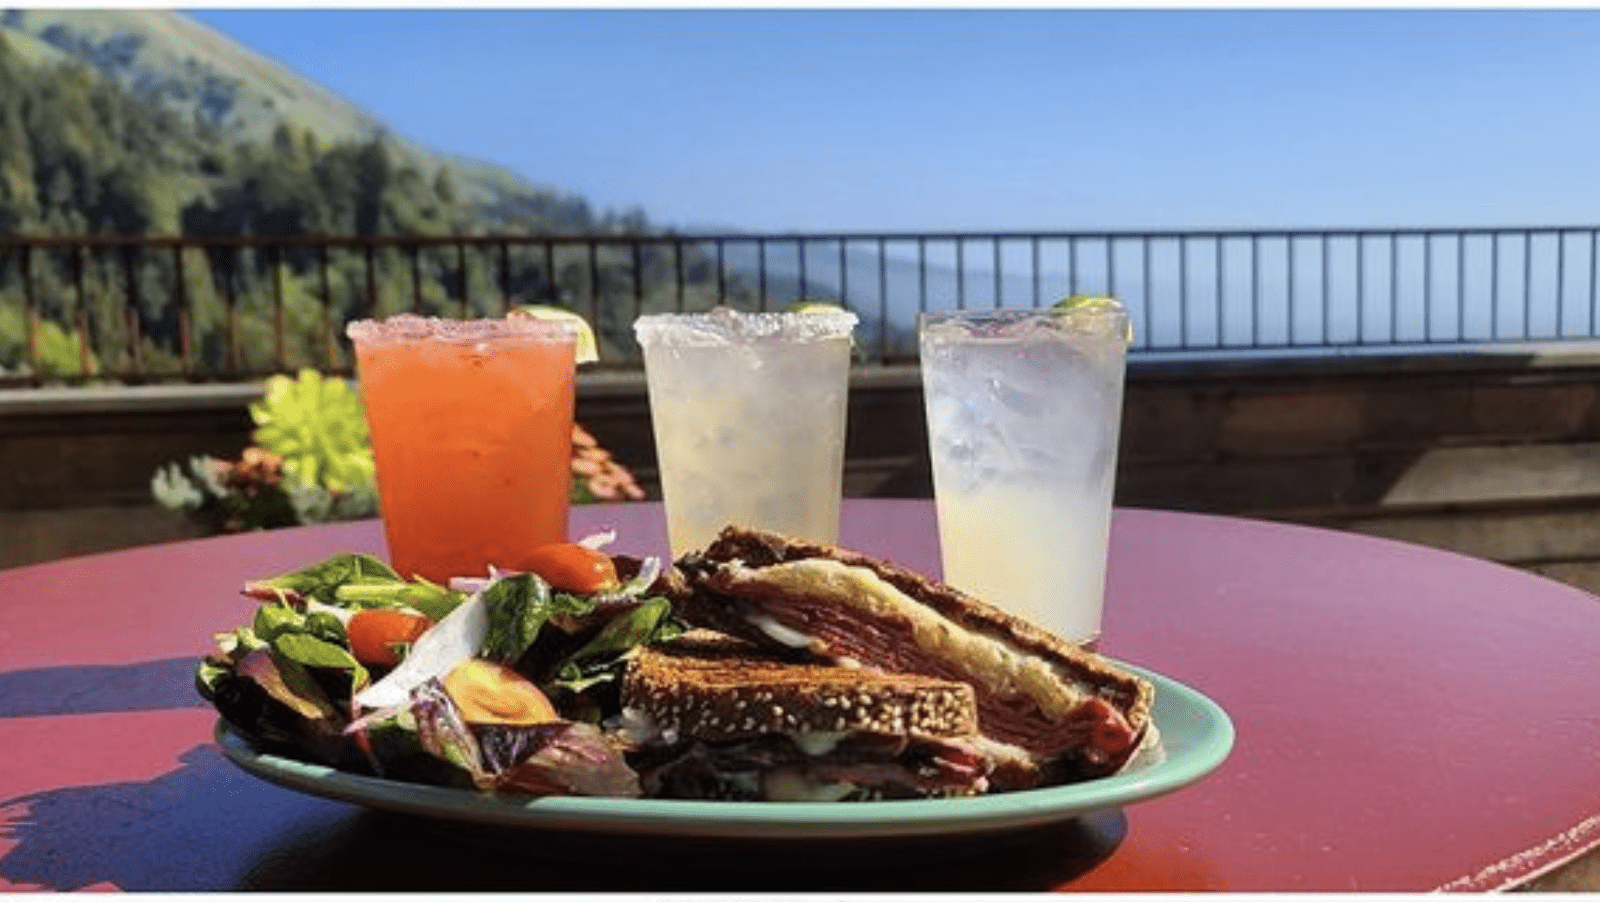 Nepenthe-Monterey Peninsula-Dinner-@nepentherestaurant-800x450